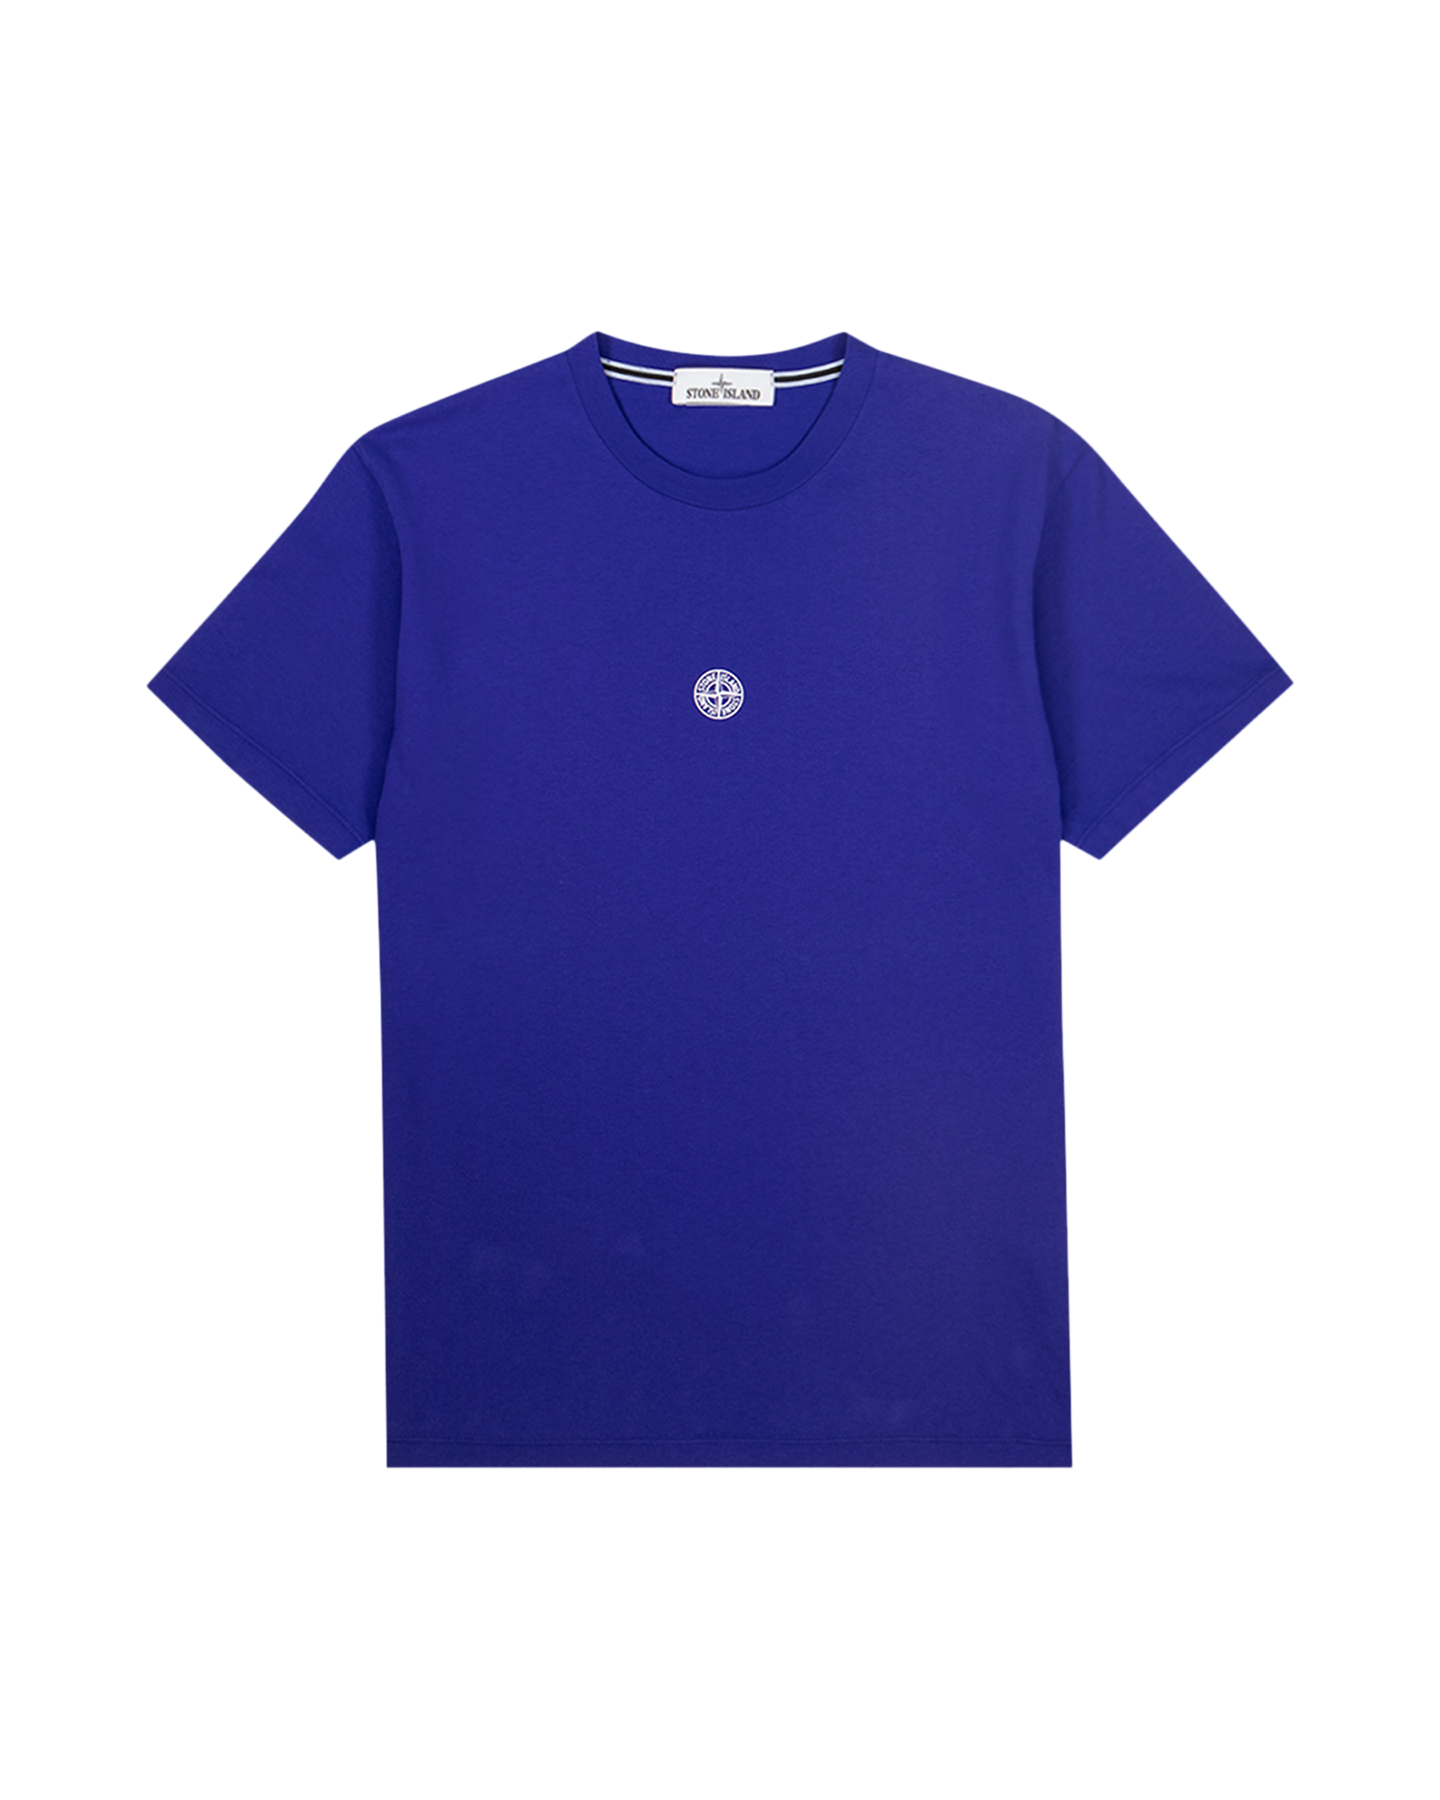 Herrie Kiezelsteen Herstellen Stone Island 2NS97 'Solar Eclipse Three' Print T-Shirt Blauw | Coef Men